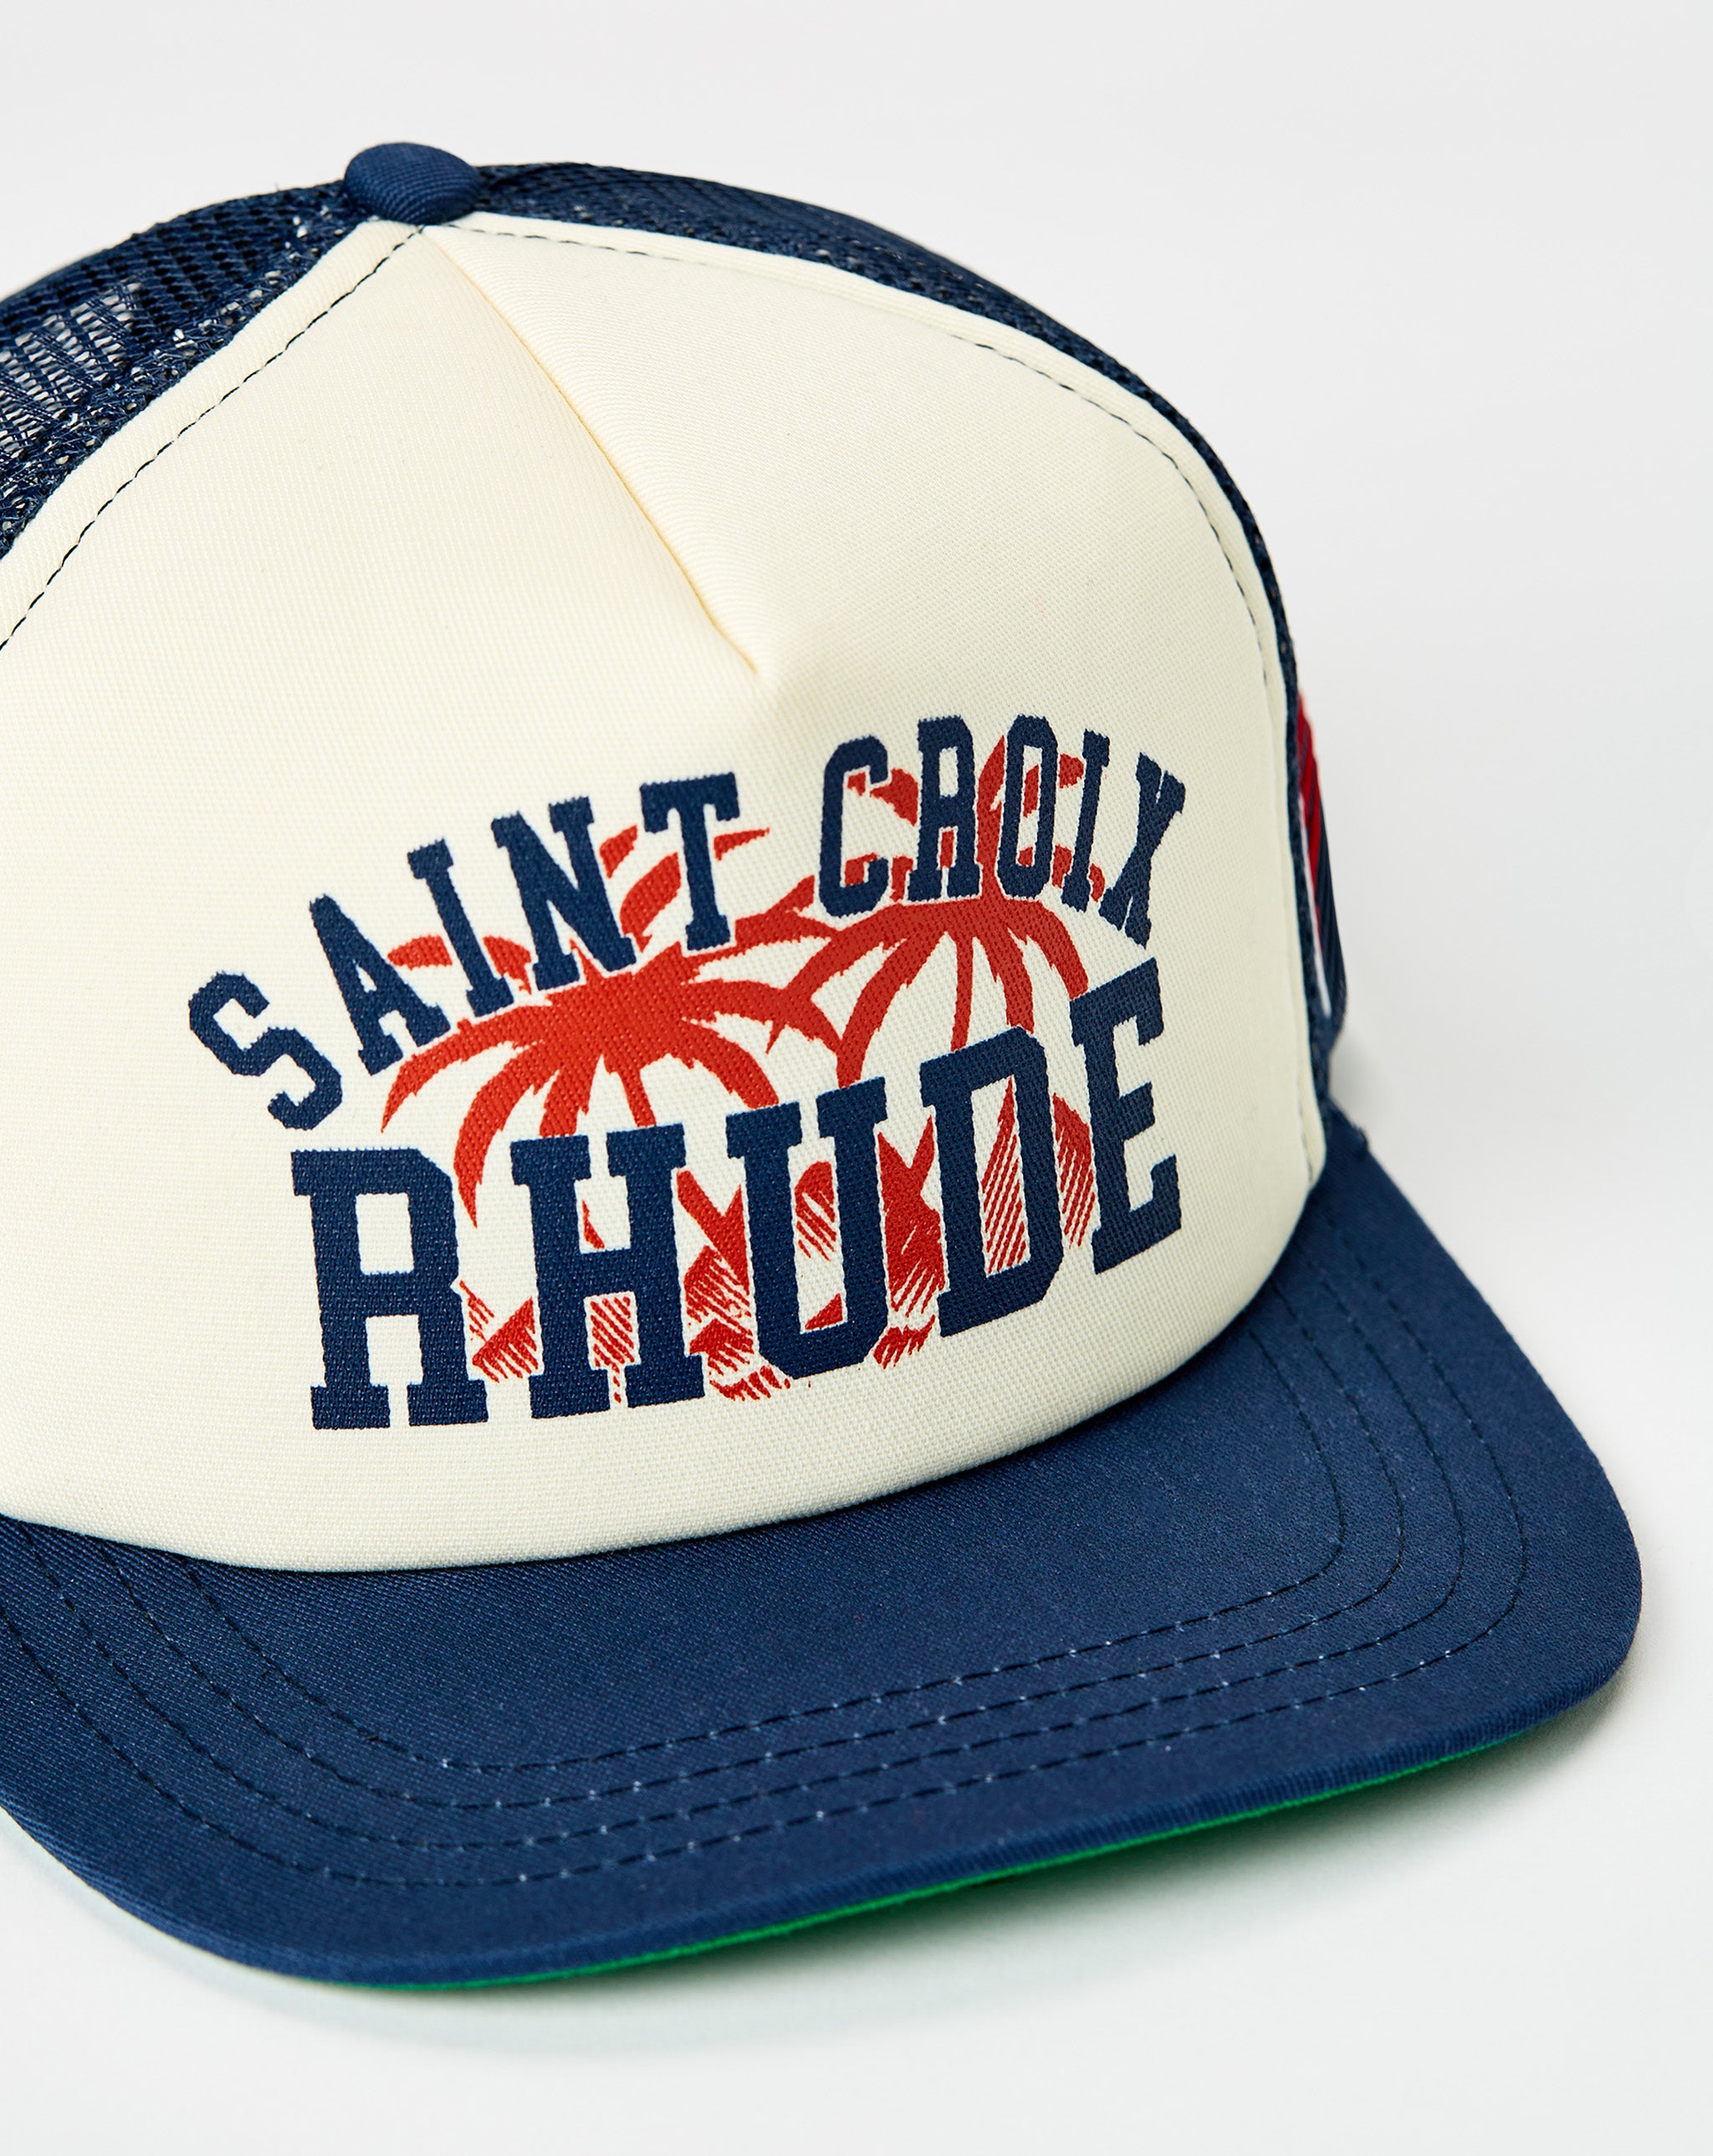 Rhude Rhude Saint Croix Trucker Hat  - XHIBITION